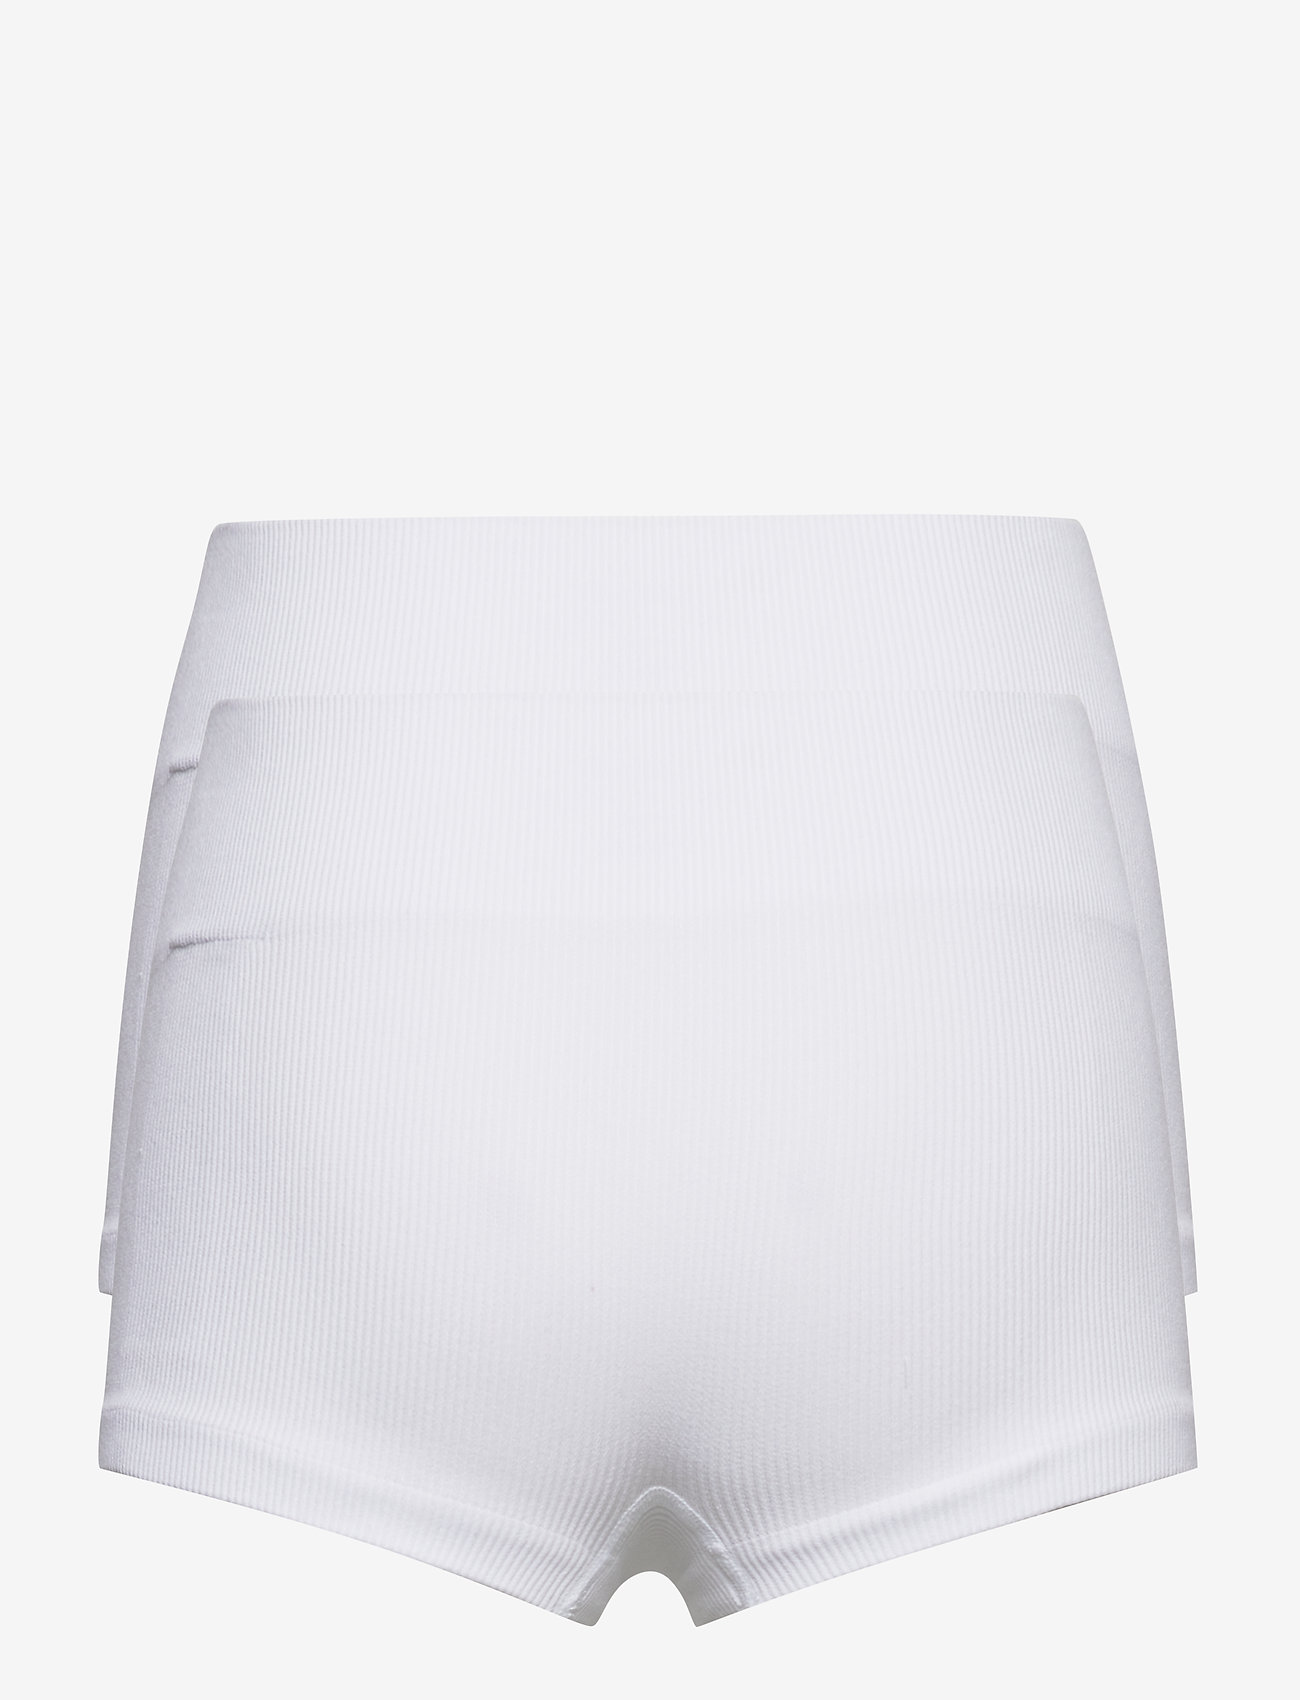 LMTD - NLFHAILEY RIB HIPSTER 2PACK - socks & underwear - bright white - 1